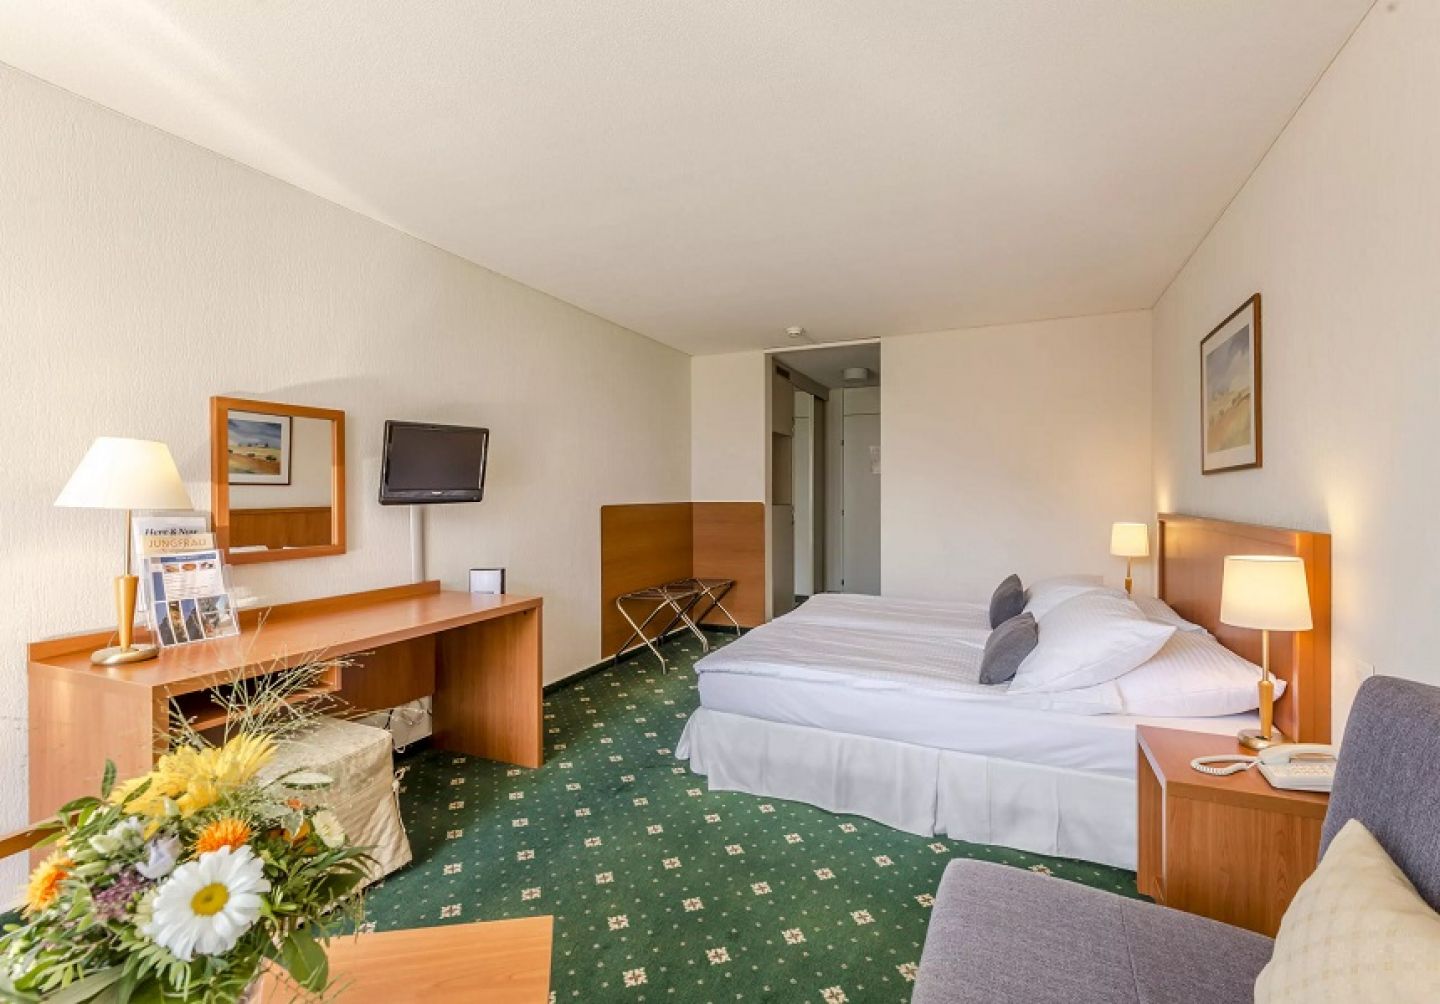 <p>Hotel Metropole Interlaken - Zimmer - MICE Service Group</p>
<p> </p>